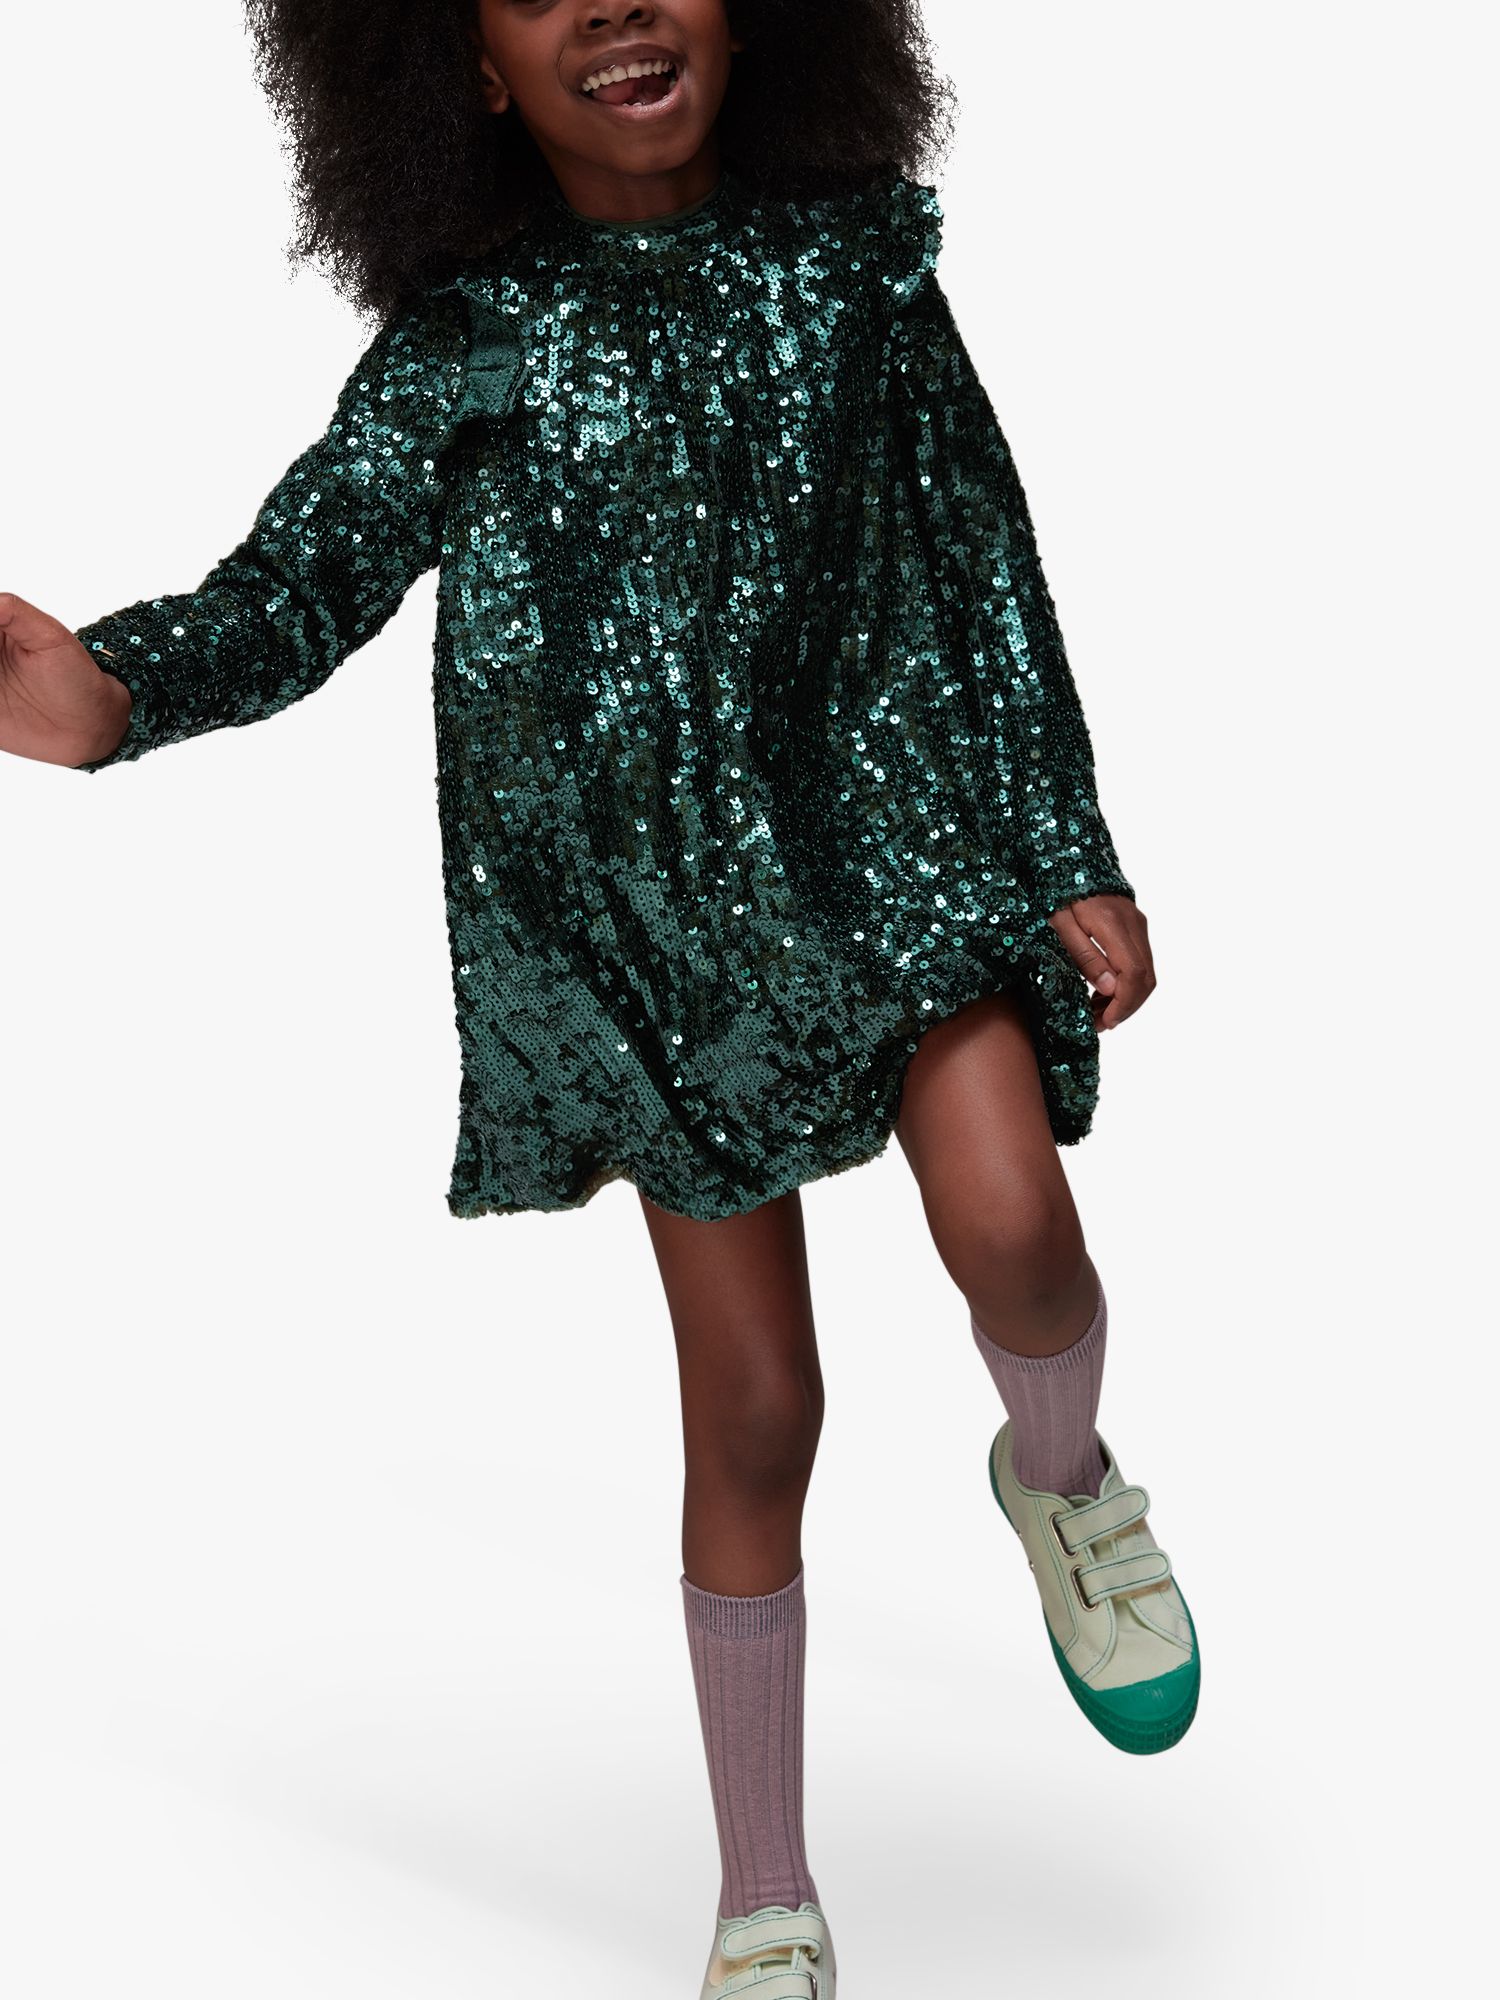 Buy Whistles Kids' Alma Sequin Dress, Dark Green Online at johnlewis.com